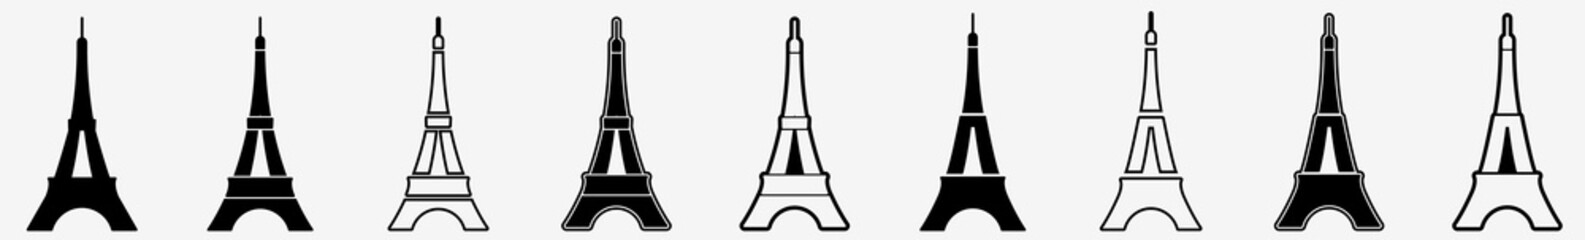 Eiffel Tower | Tower | Emblem | Logo | Variations